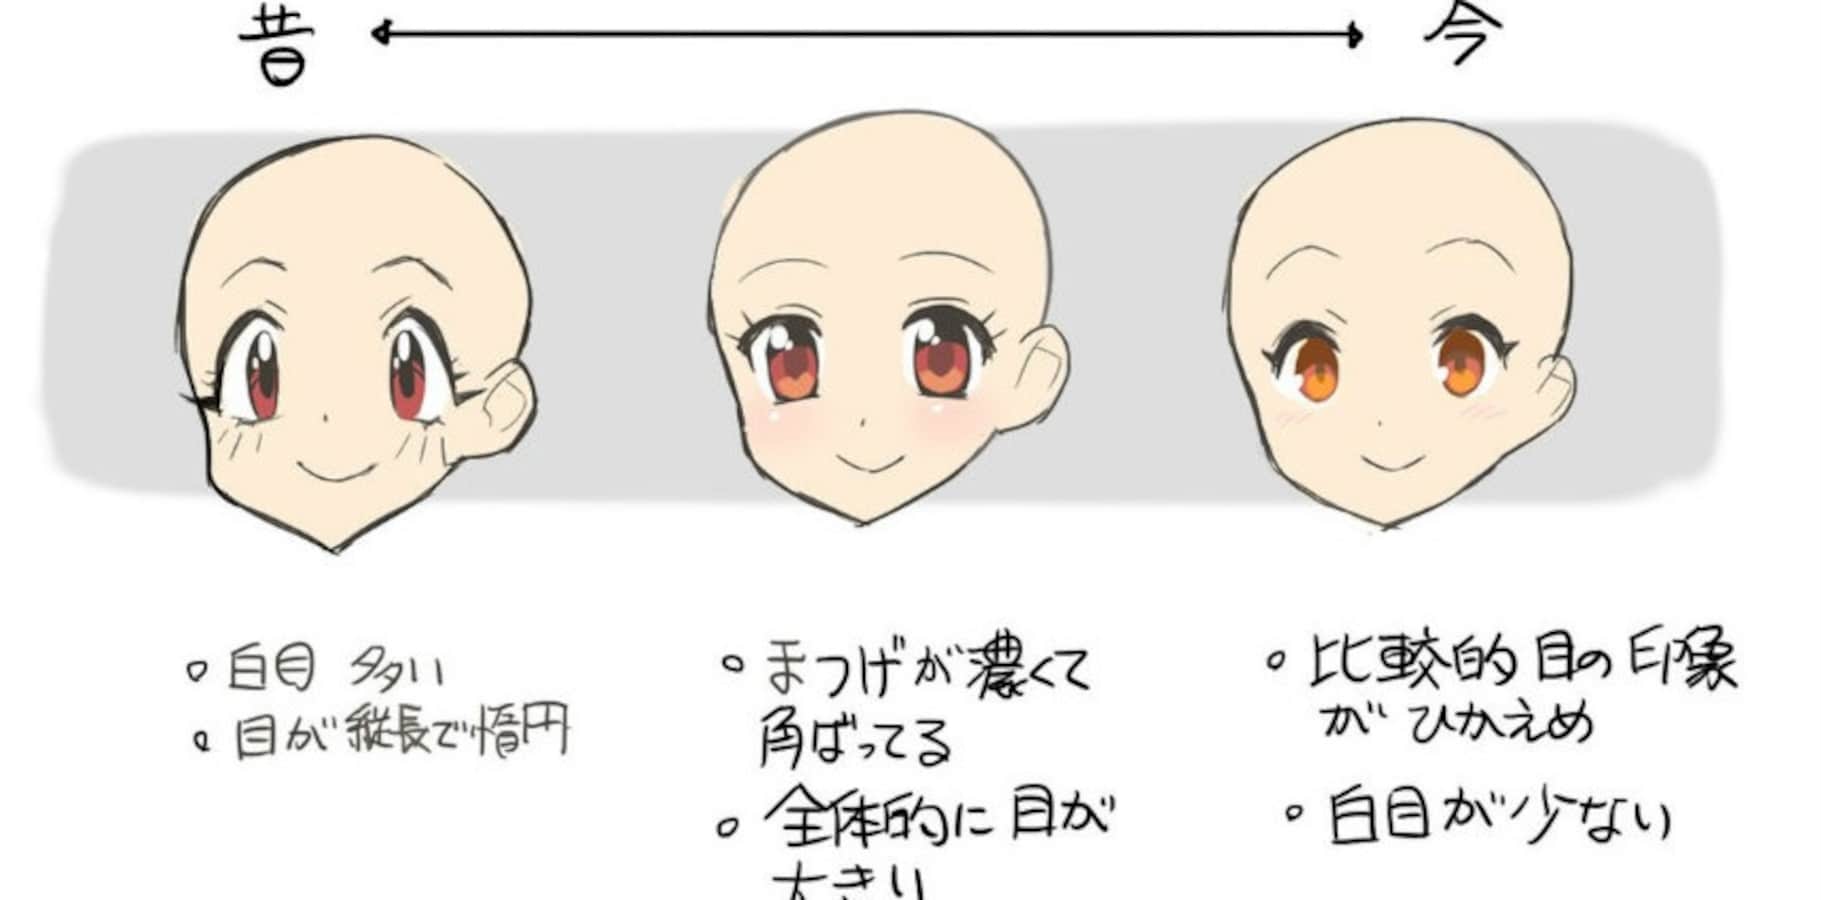 Emotions red eyes of anime manga girls. Rreal cartoon red eyes of anime  manga girls, in japanese style. set of various | CanStock